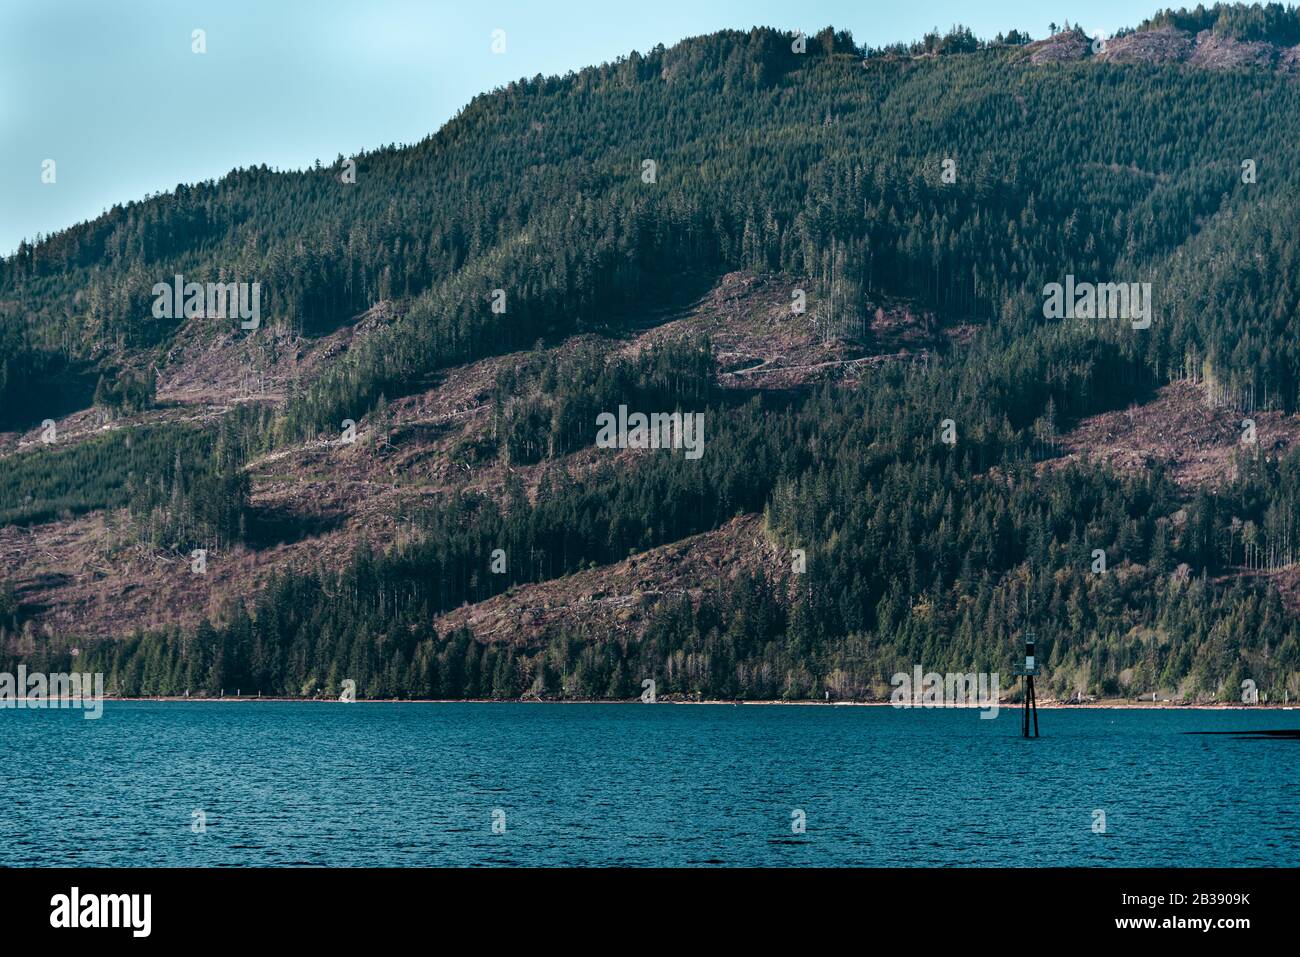 Deforestation Along the Alberni Inlet, Vancouver Island, British Columbia, Canada Stock Photo